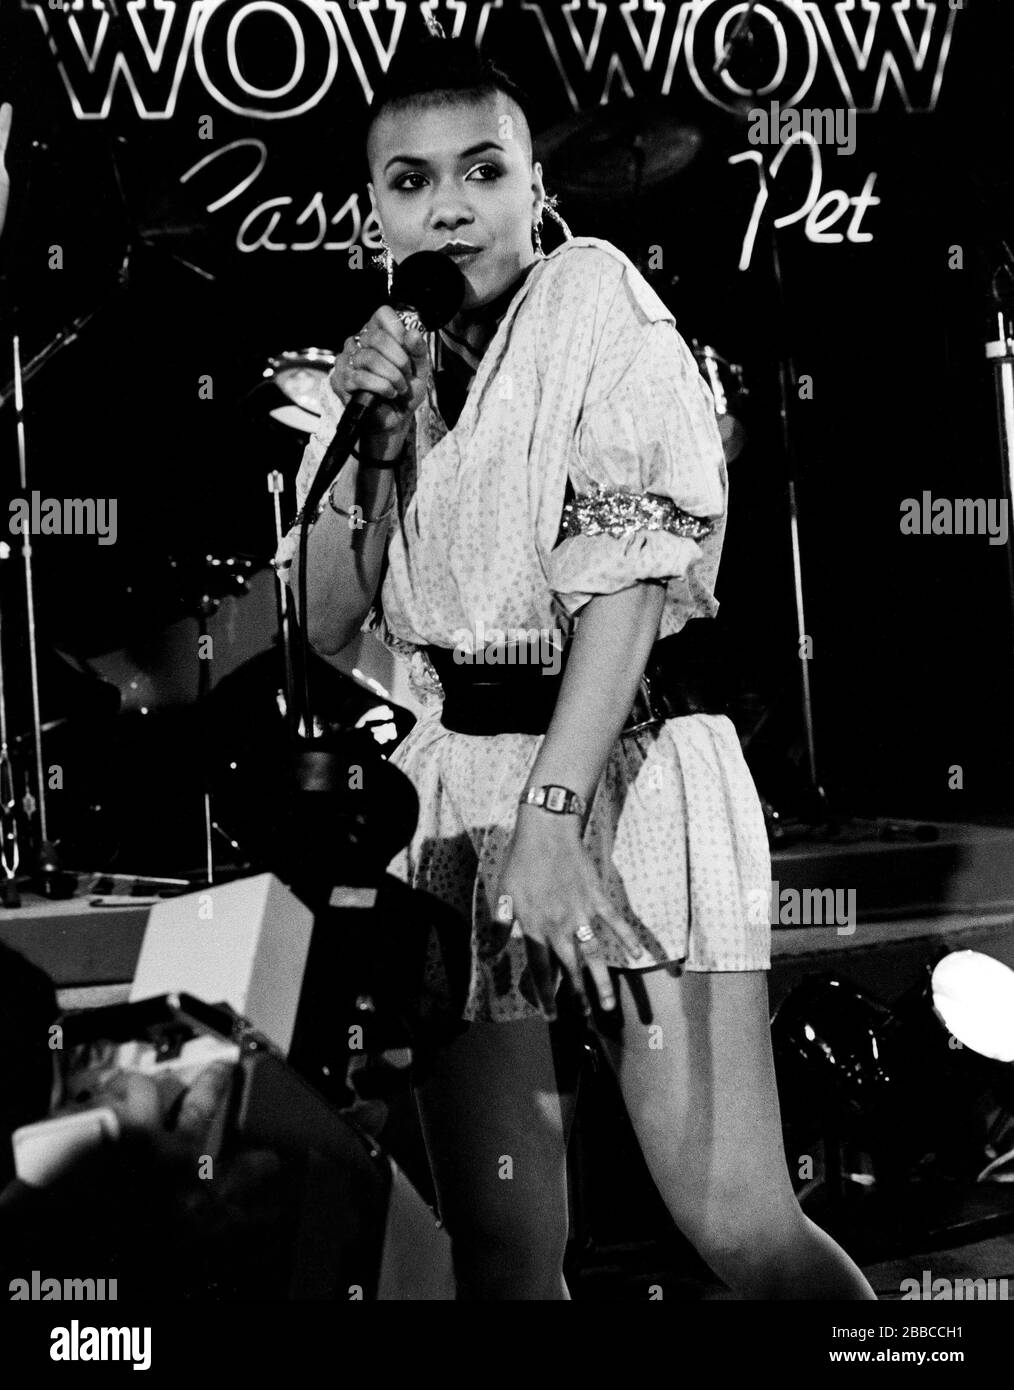 Annabella Lwin of Bow Wow Wow December 31, 1981 Credit: Scott Weiner / MediaPunch Stock Photo